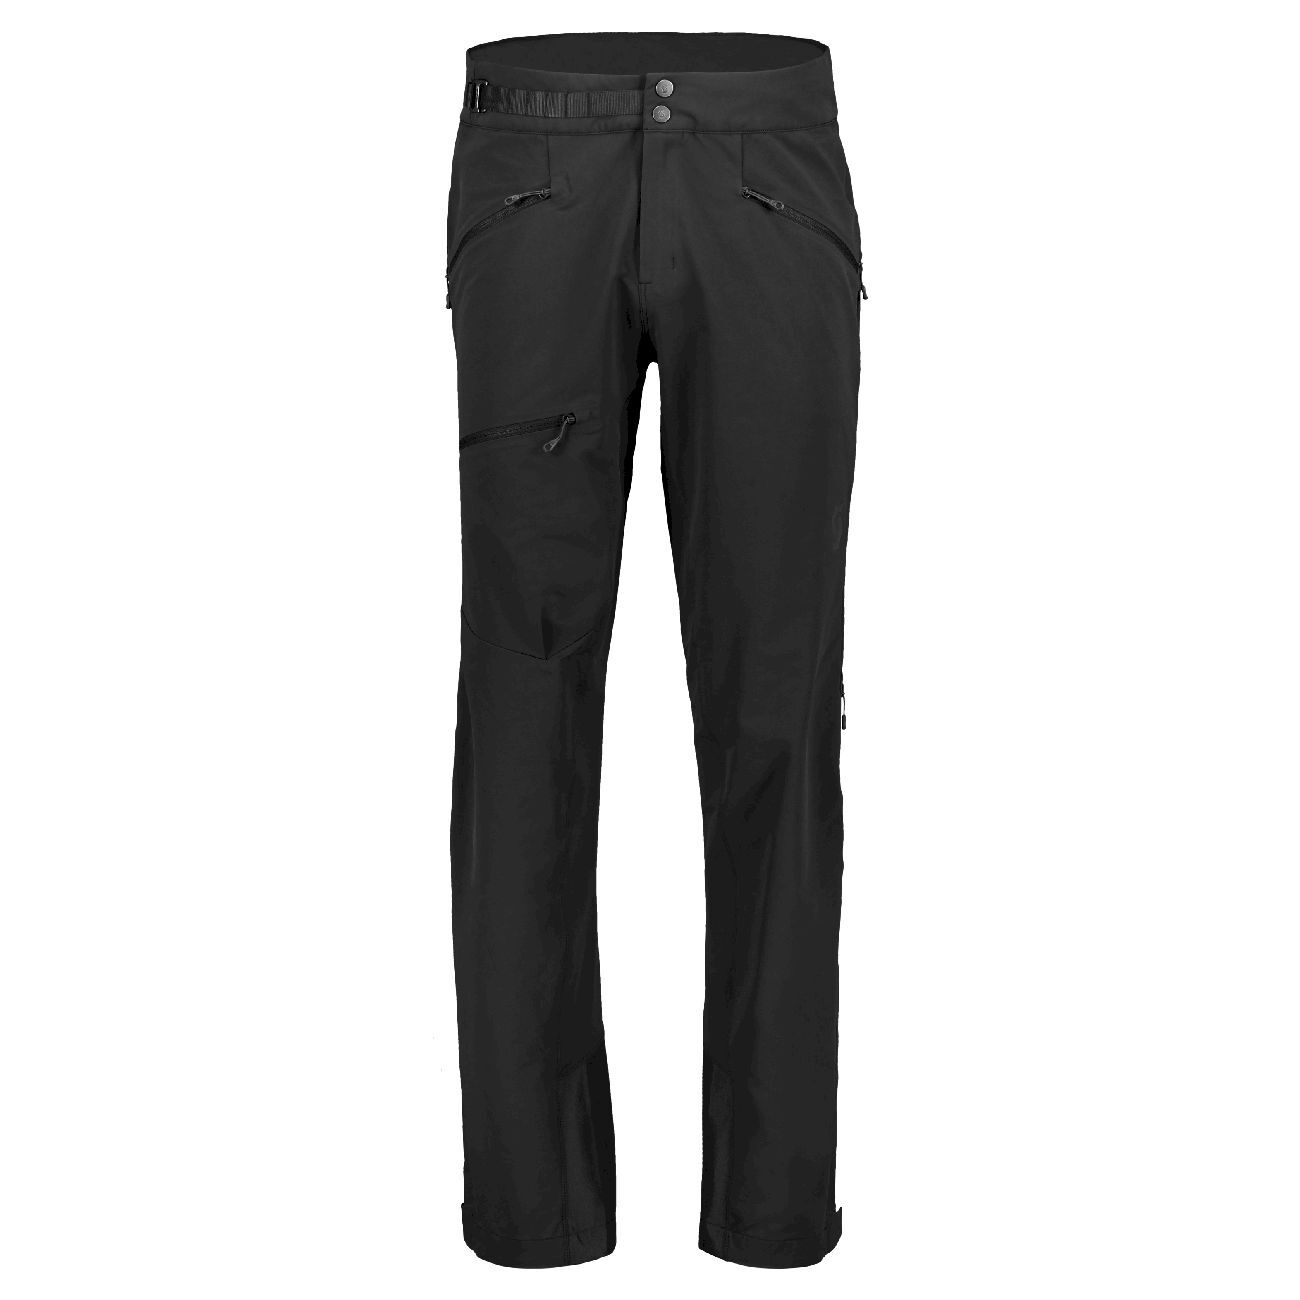 Scott Explorair Softshell Pants - Softshell trousers - Men's